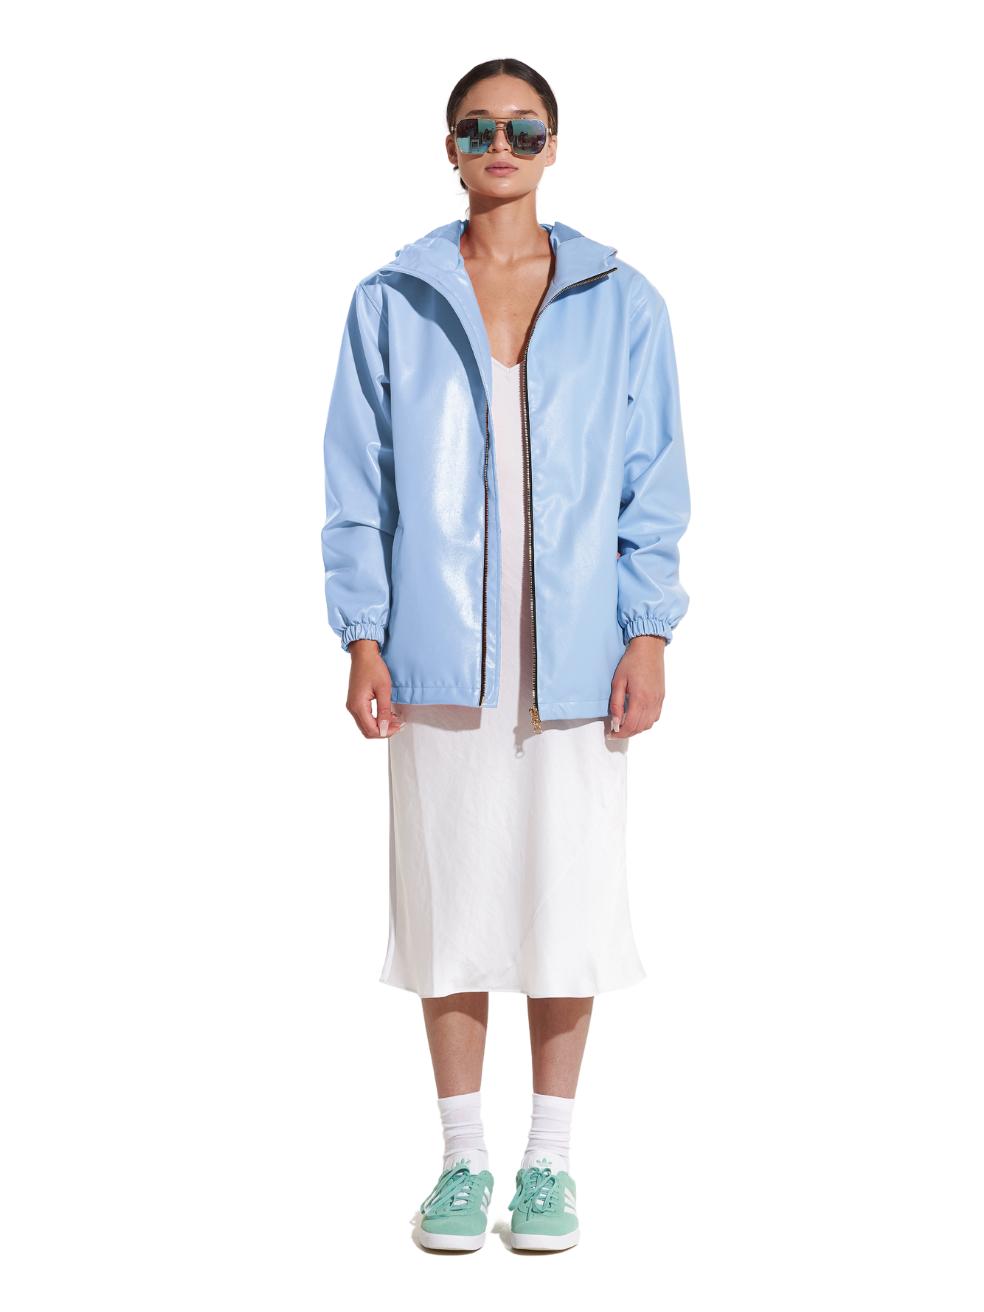 Hunter Capri Blue Sustainable Outerwear Raincoat Vegan Leather